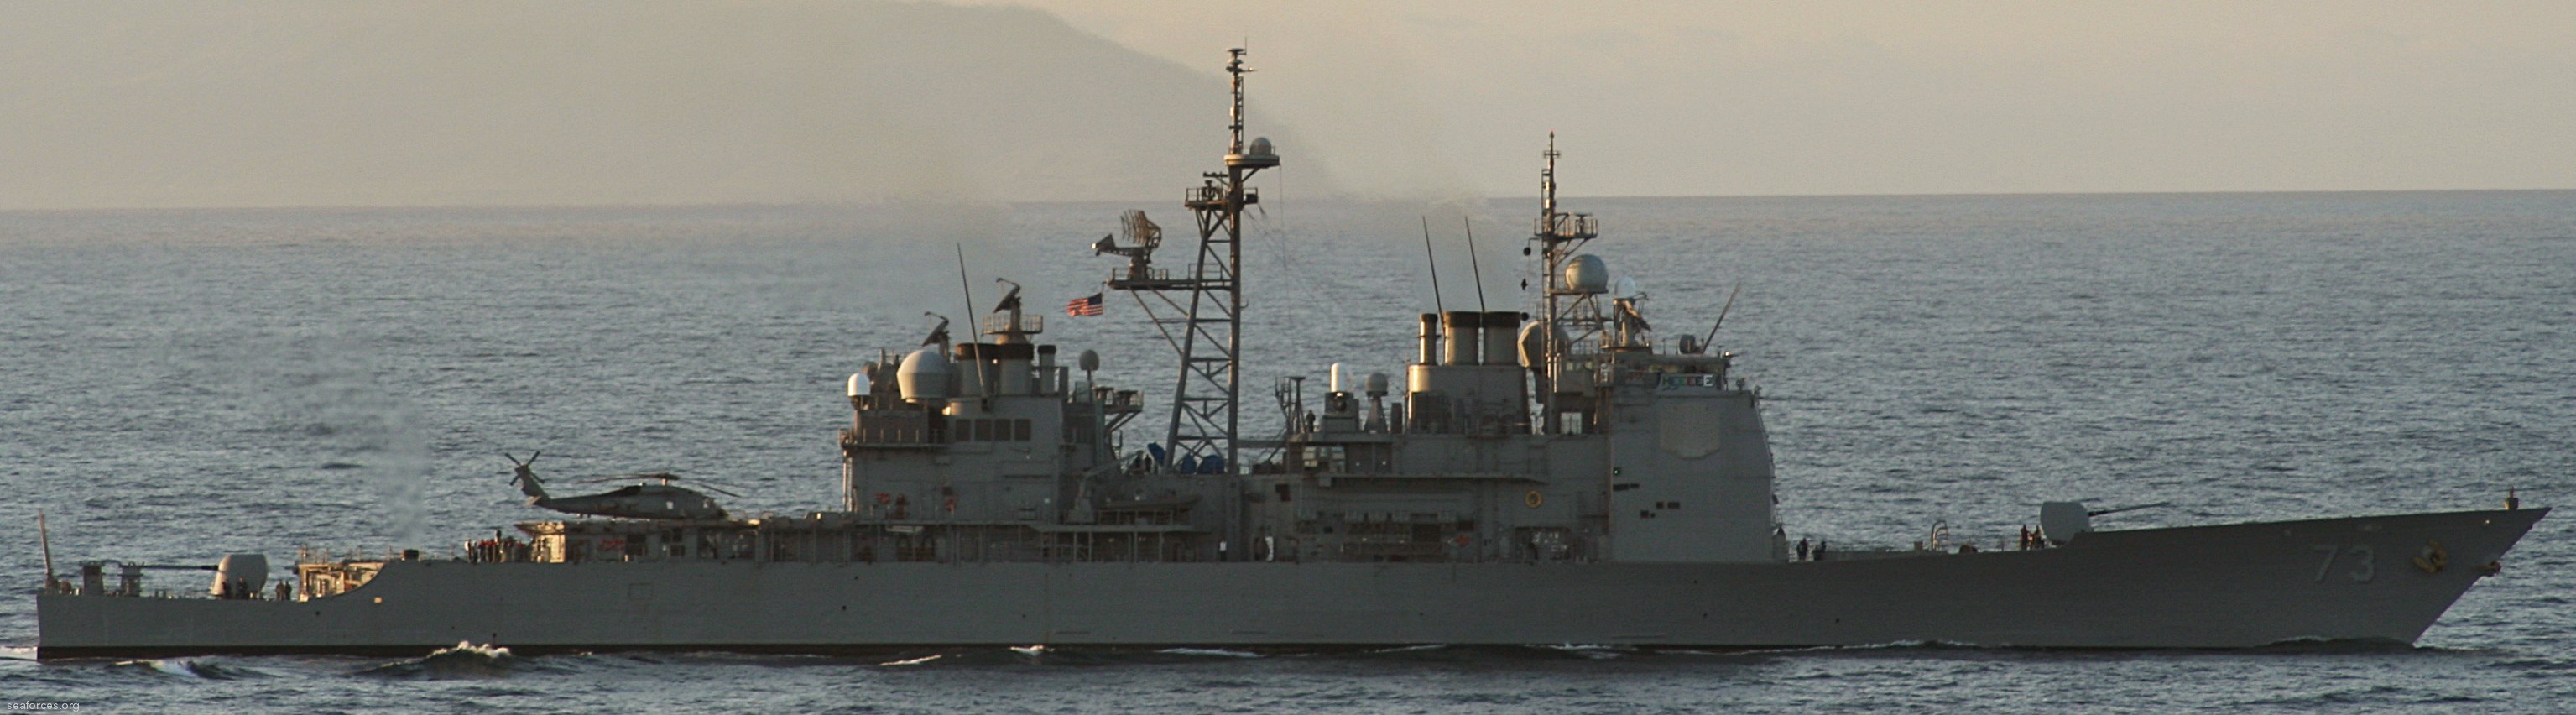 cg-73 uss port royal ticonderoga class guided missile cruiser navy 32